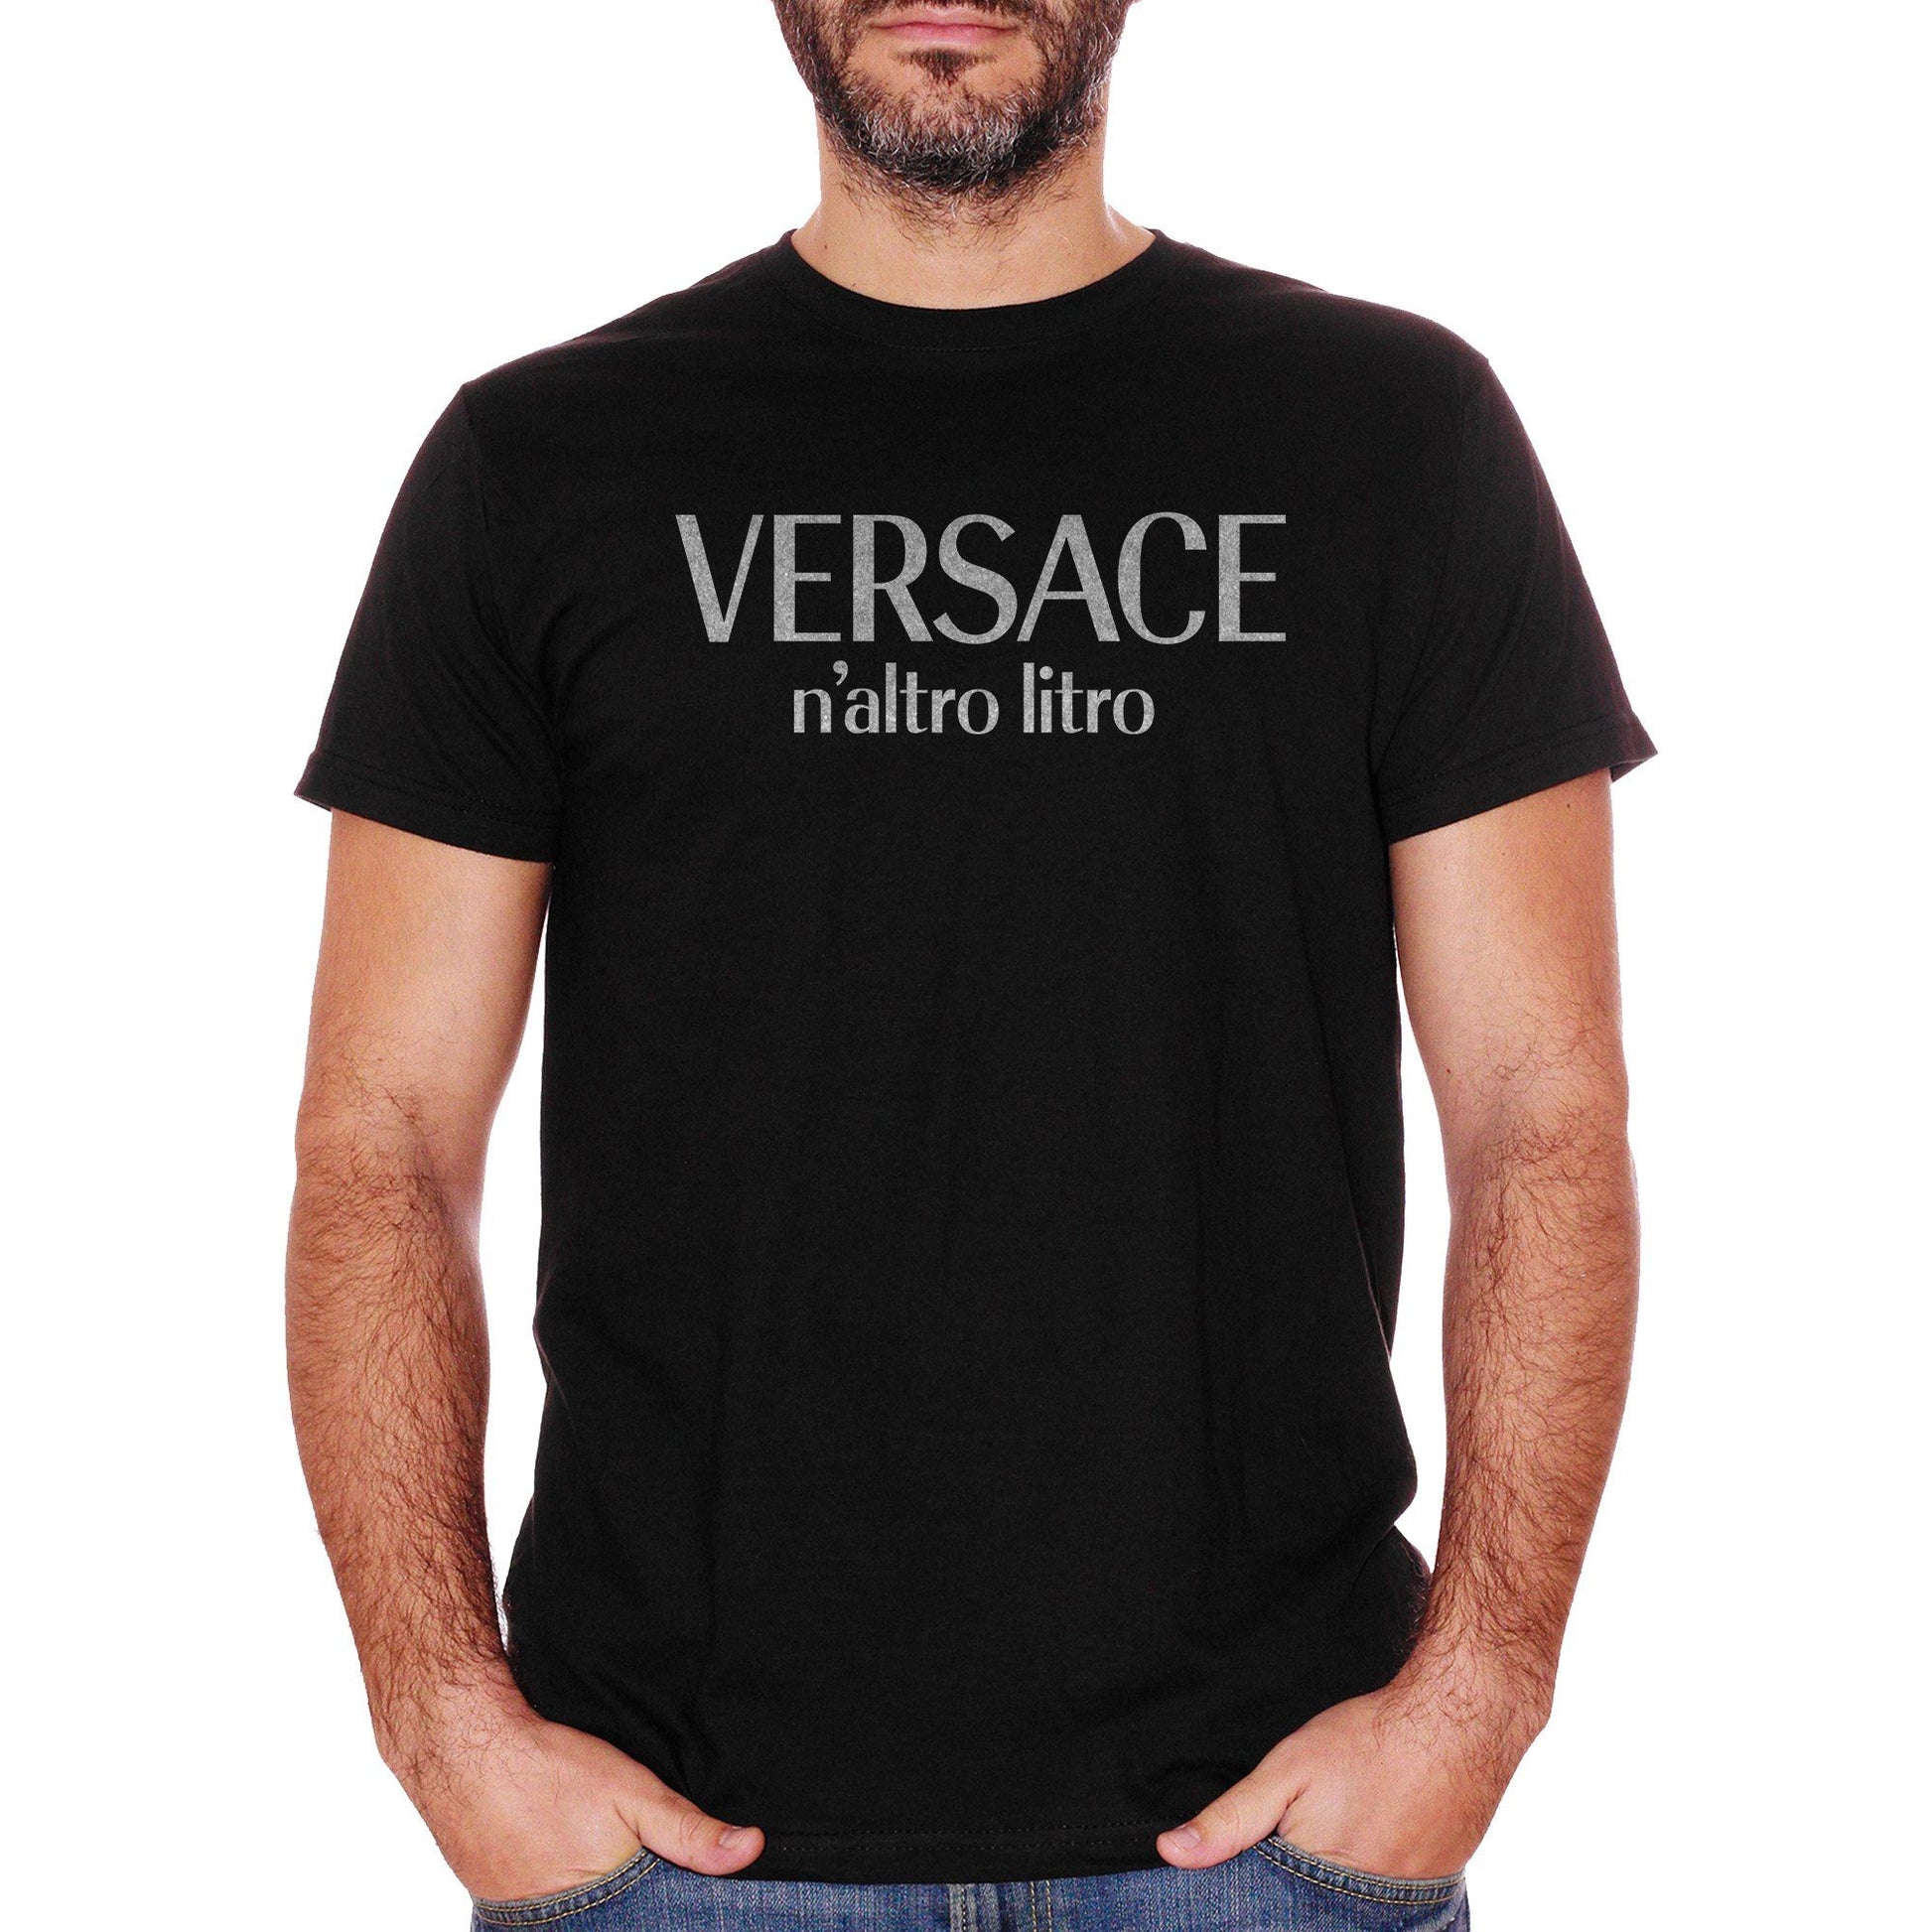 T-Shirt Versace N'altro Litro Frase Divertente Bevute - Funny Choose ur  color